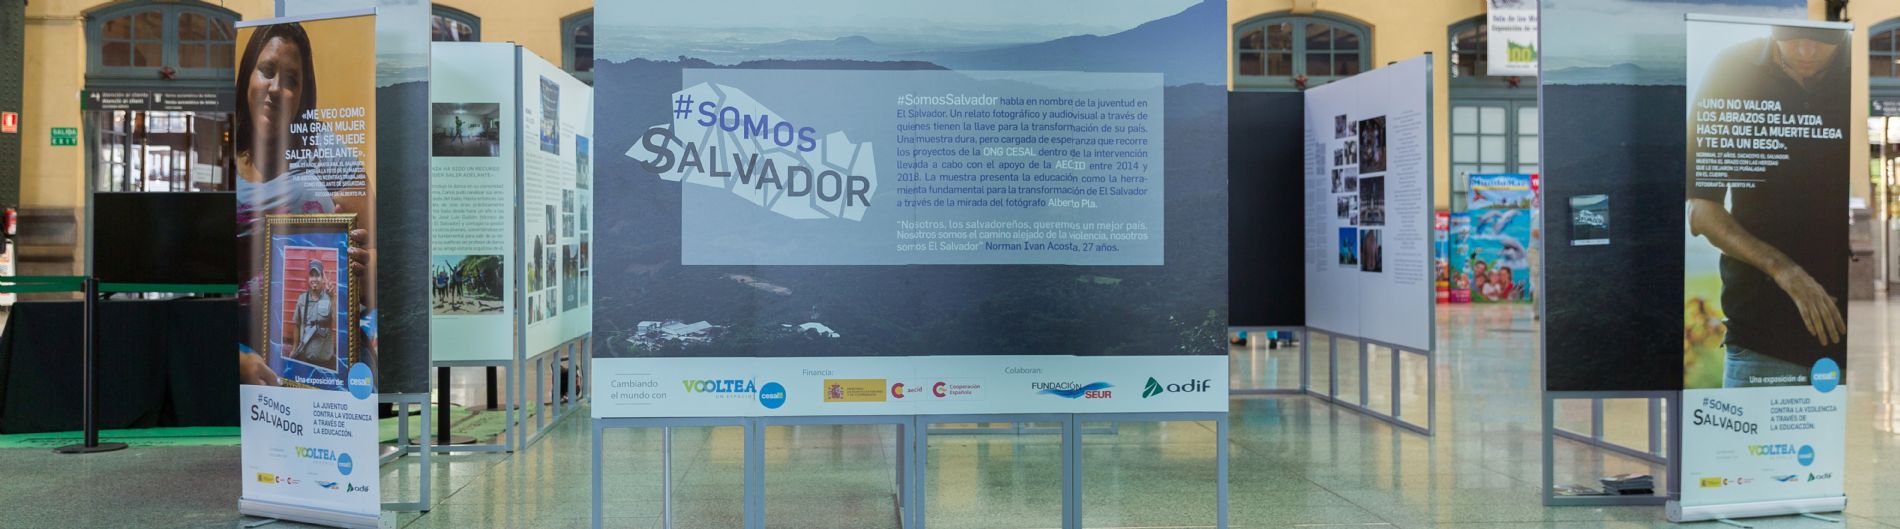 Exposición #SomosSalvador